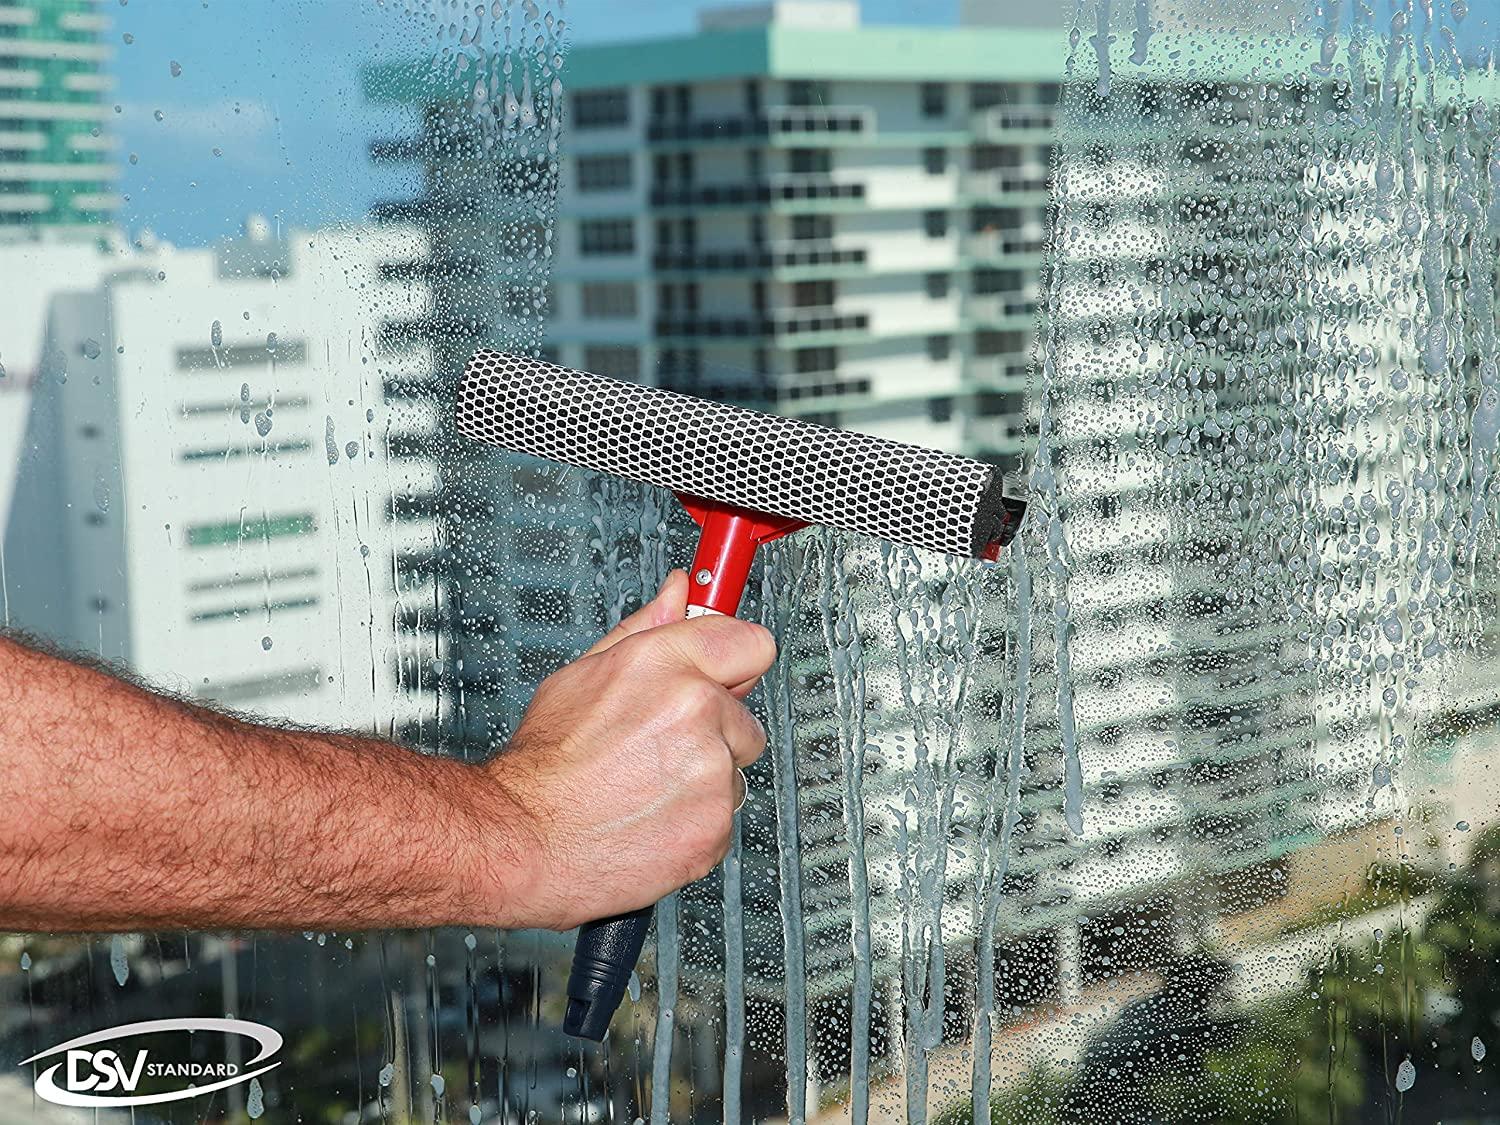 MULING Window Squeegee Cleaning Tool Window Cleaner Car Squeegee